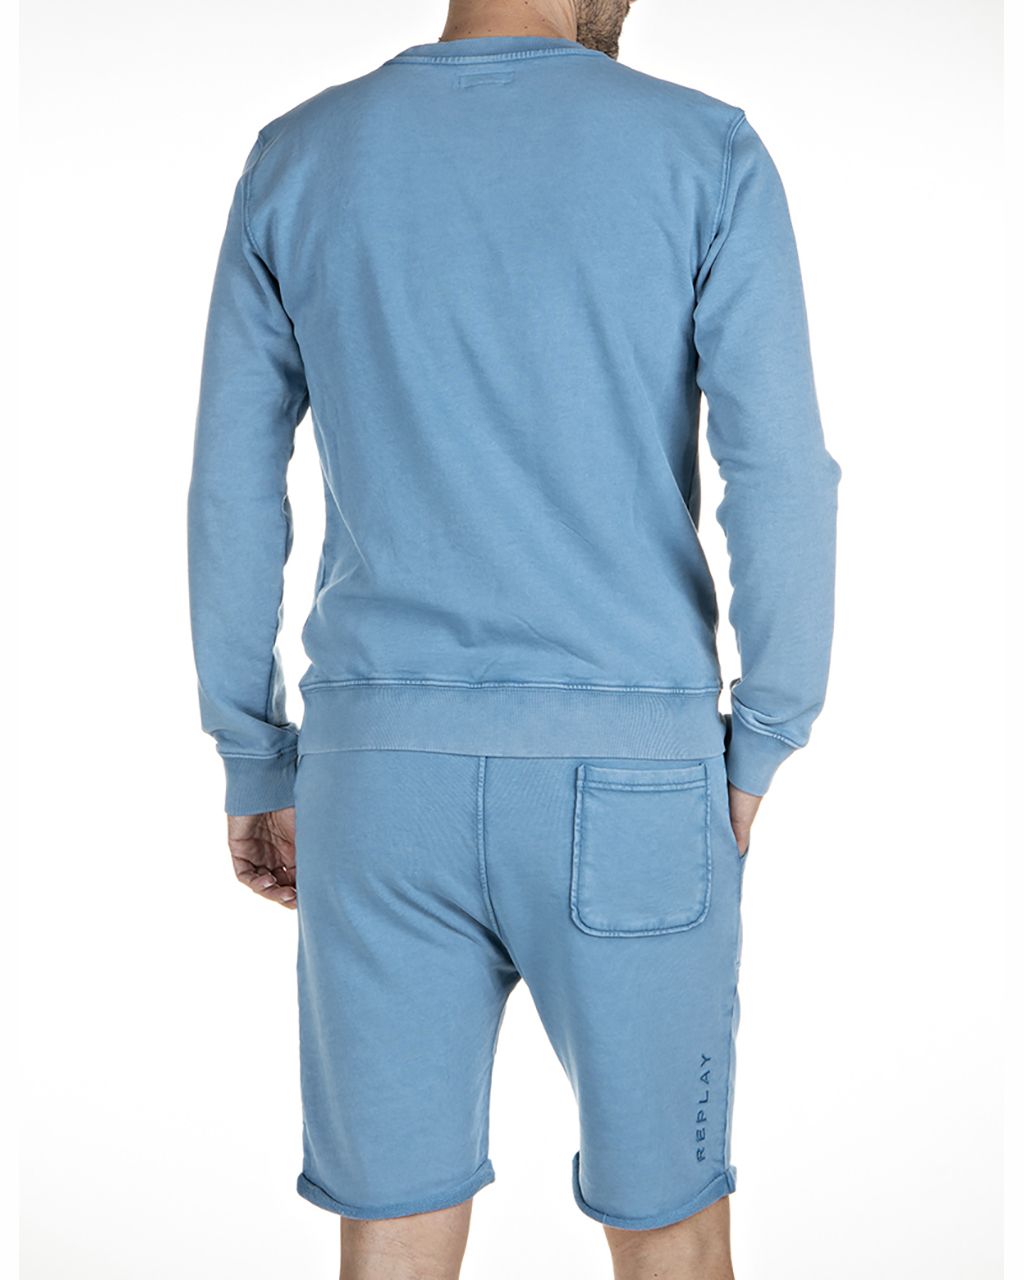 Replay Sweater Blauw 078259-001-L